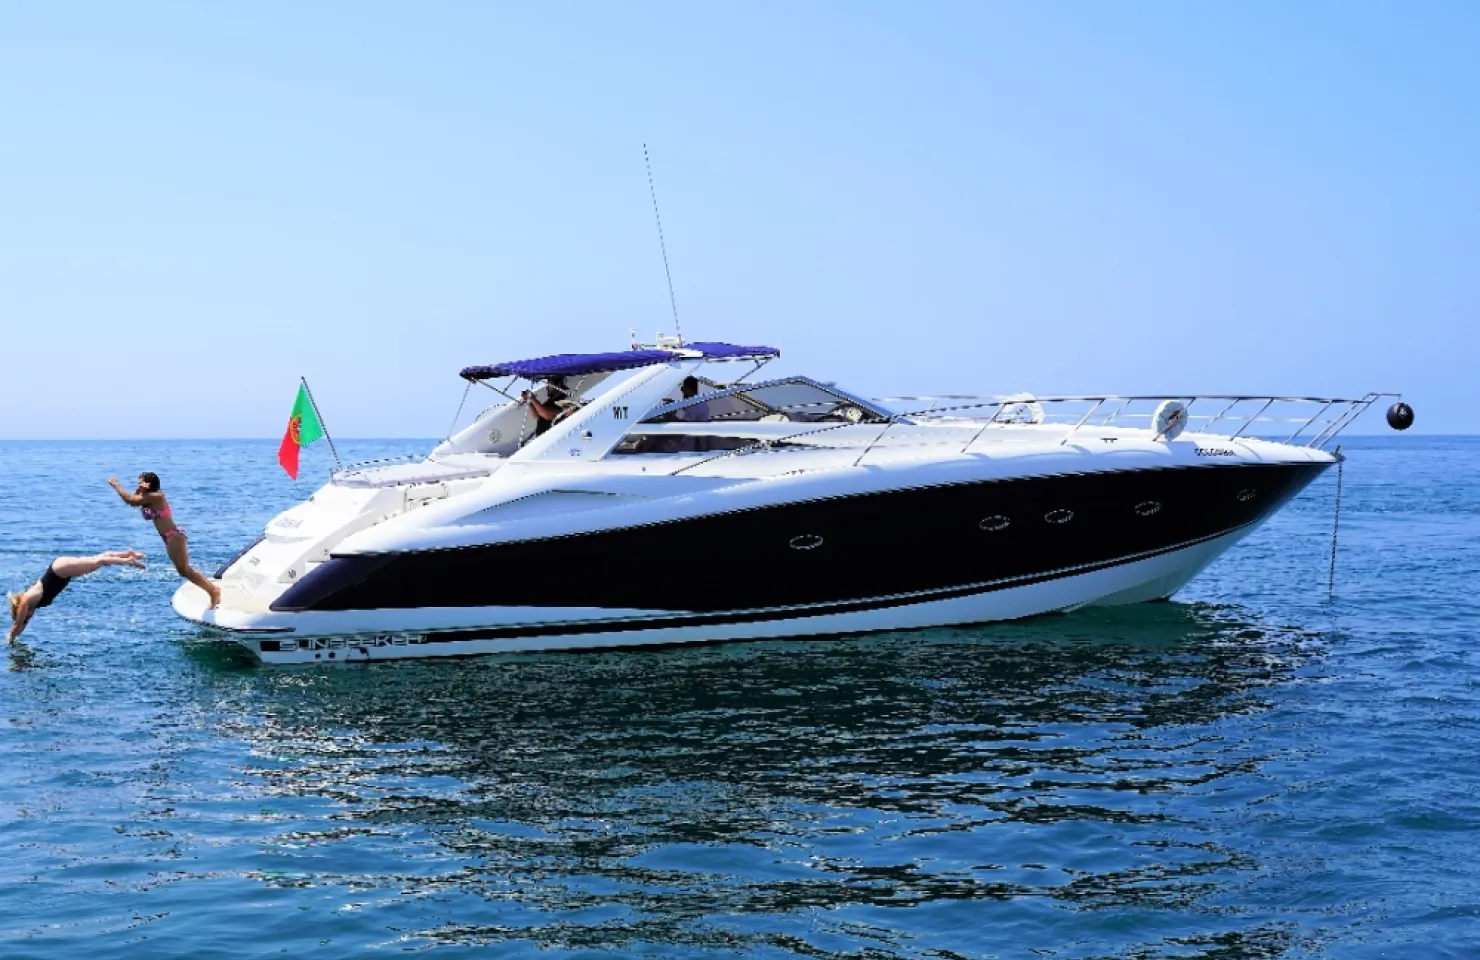  Sunseeker Portofino Charter Yacht - Boats for Private Charter Vilamoura